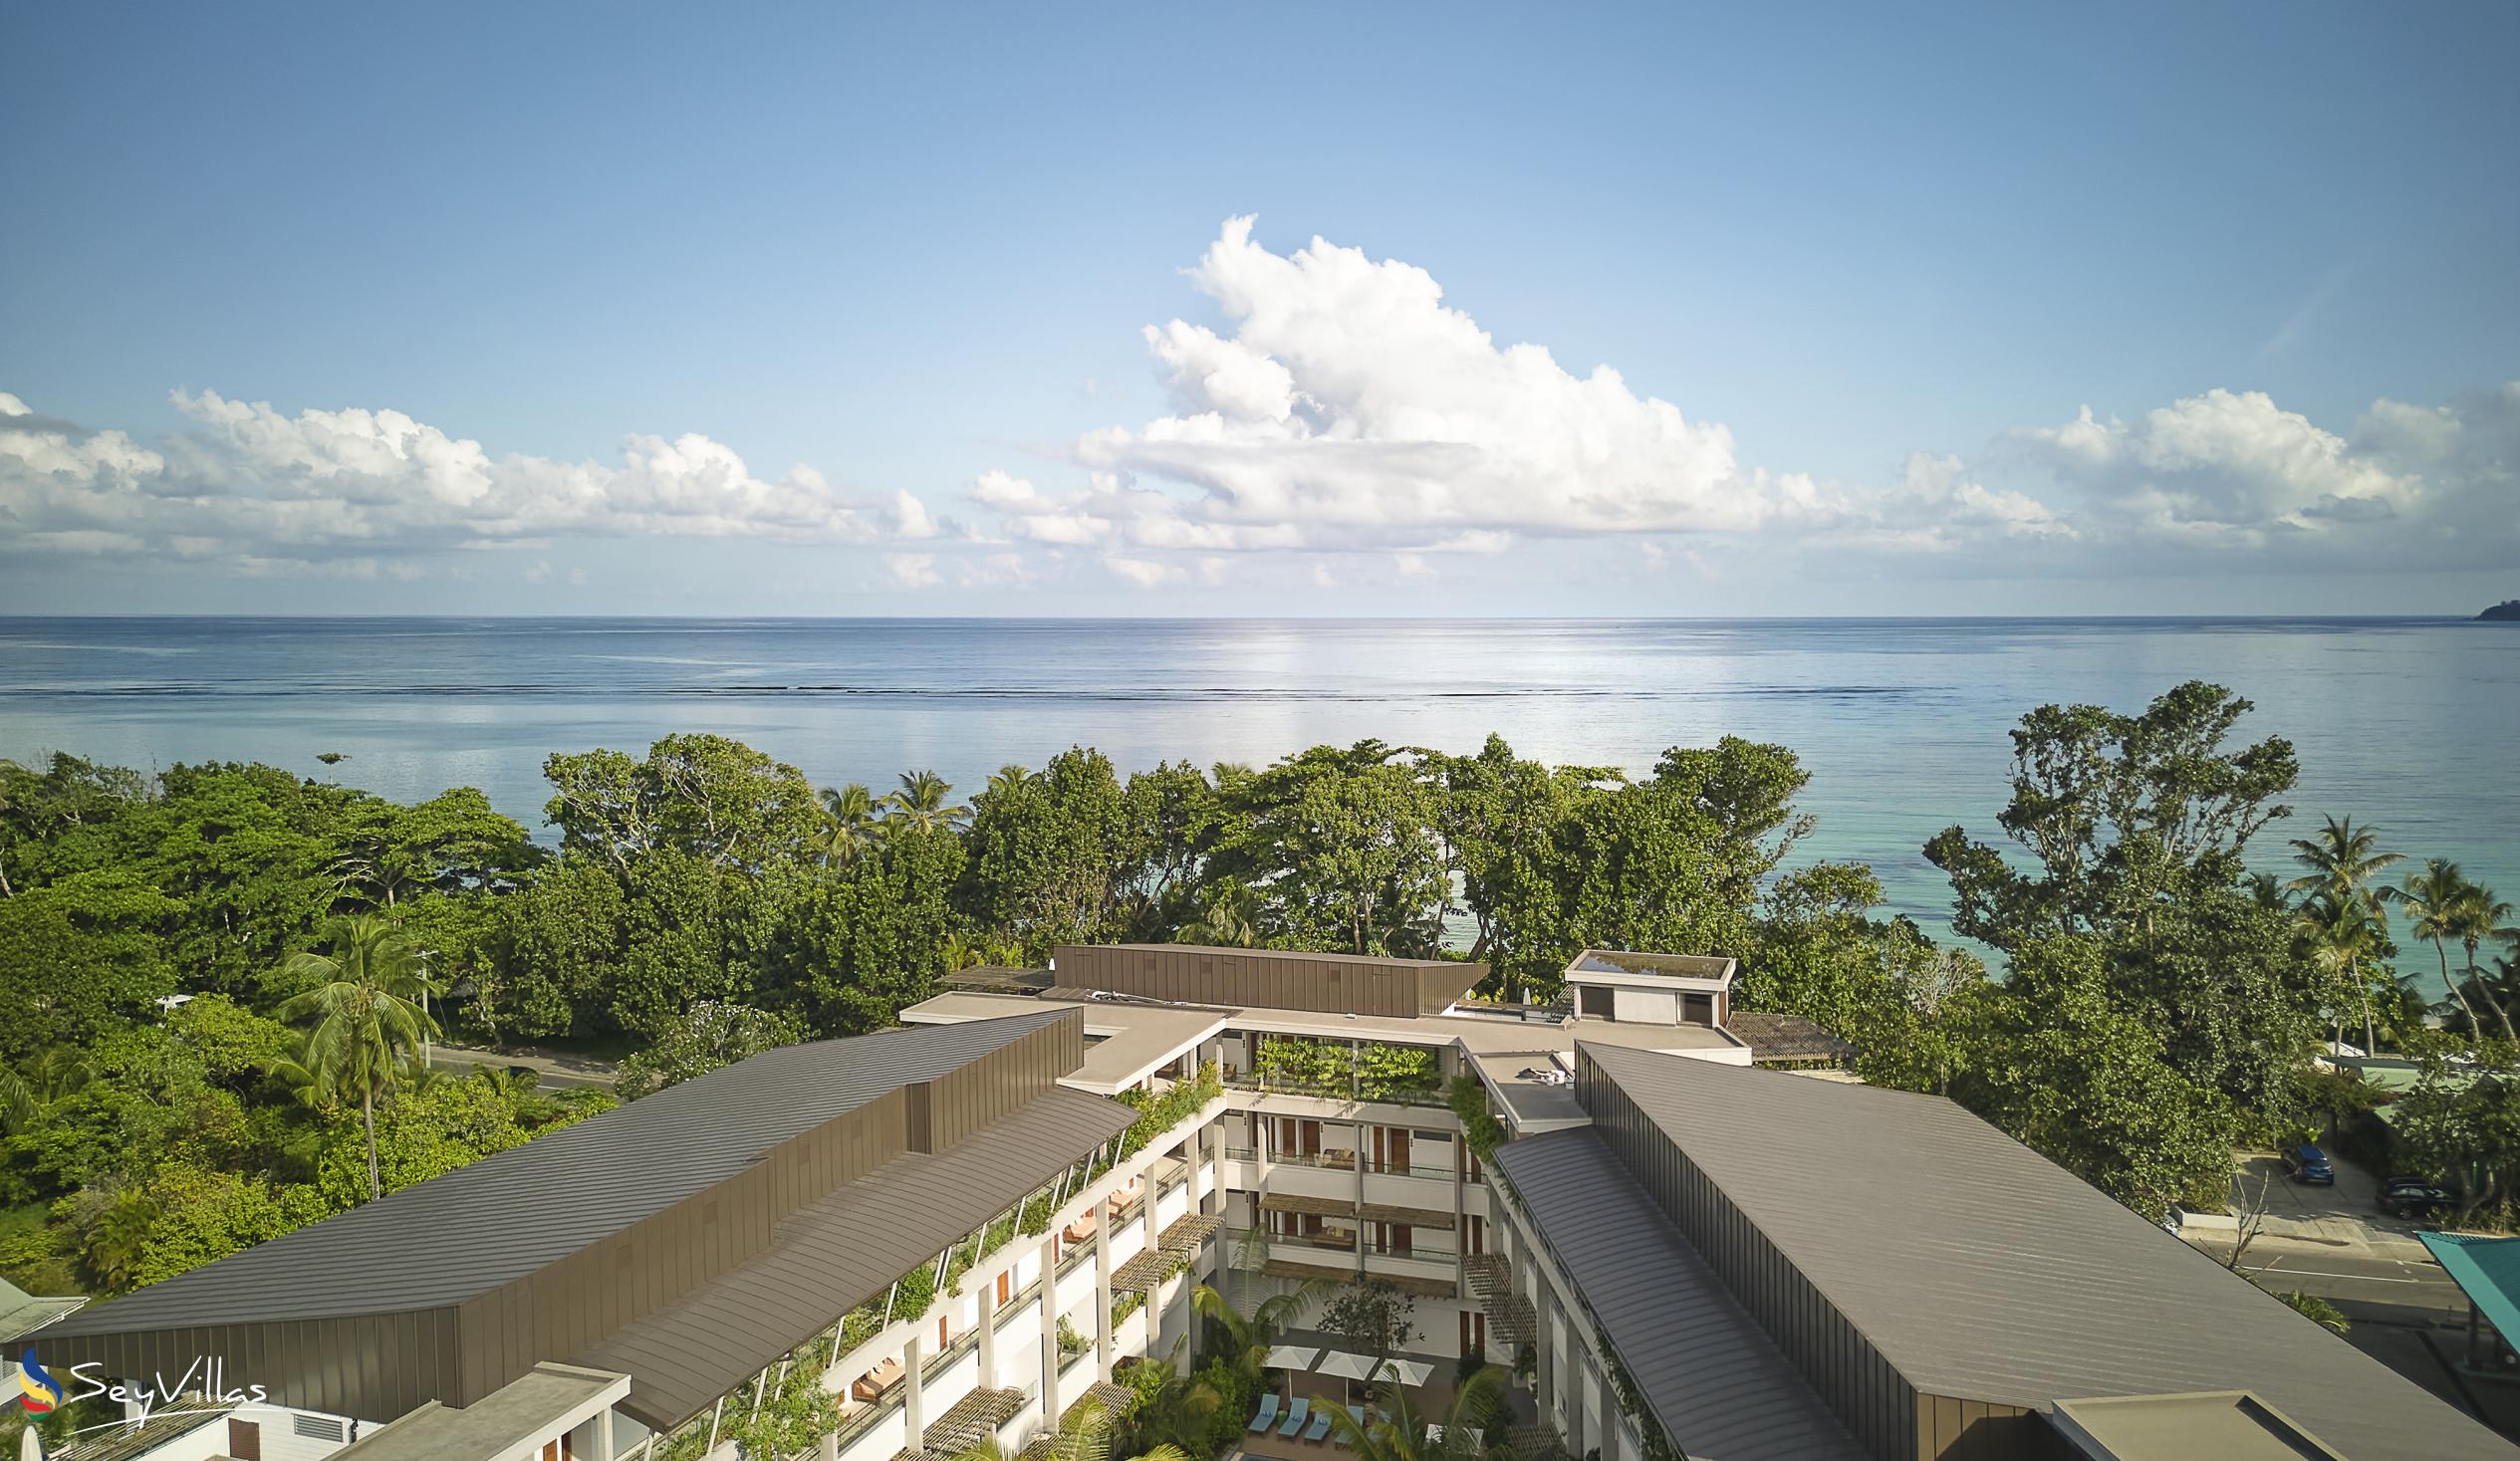 Photo 2: laila Resort - Outdoor area - Mahé (Seychelles)